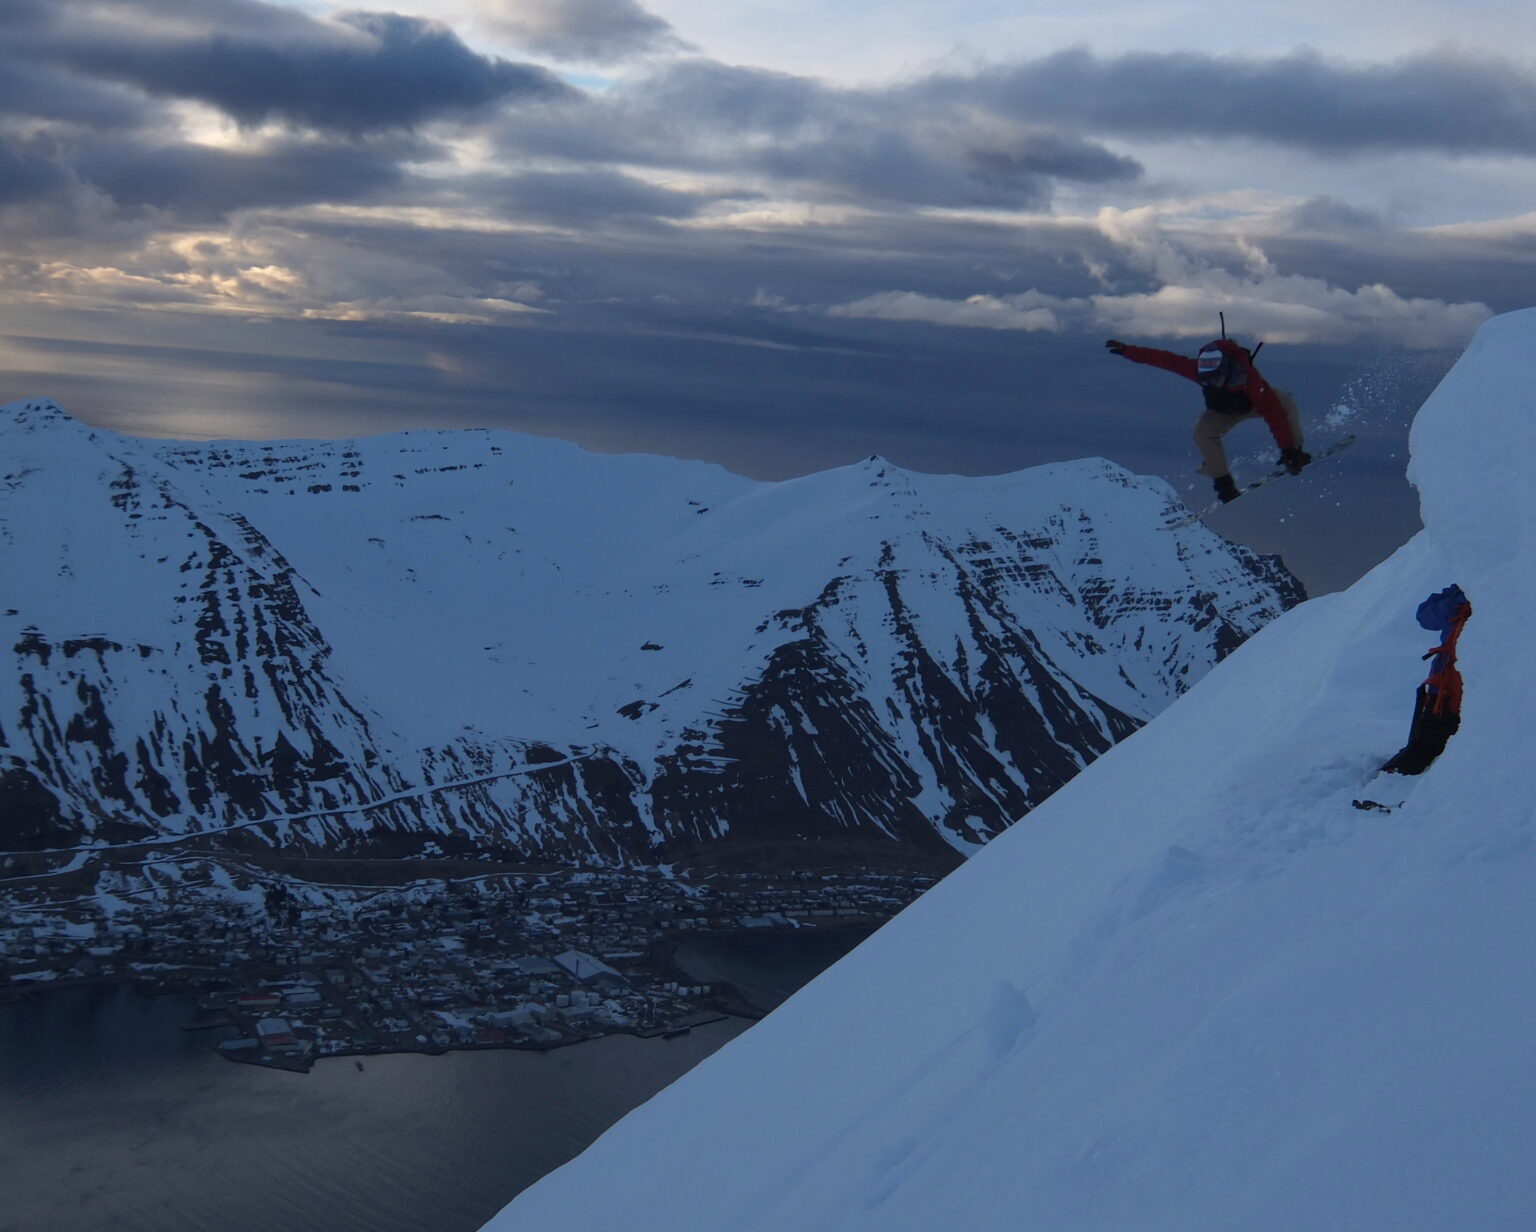 Having fun snowboarding off a cornice in Northern Iceland